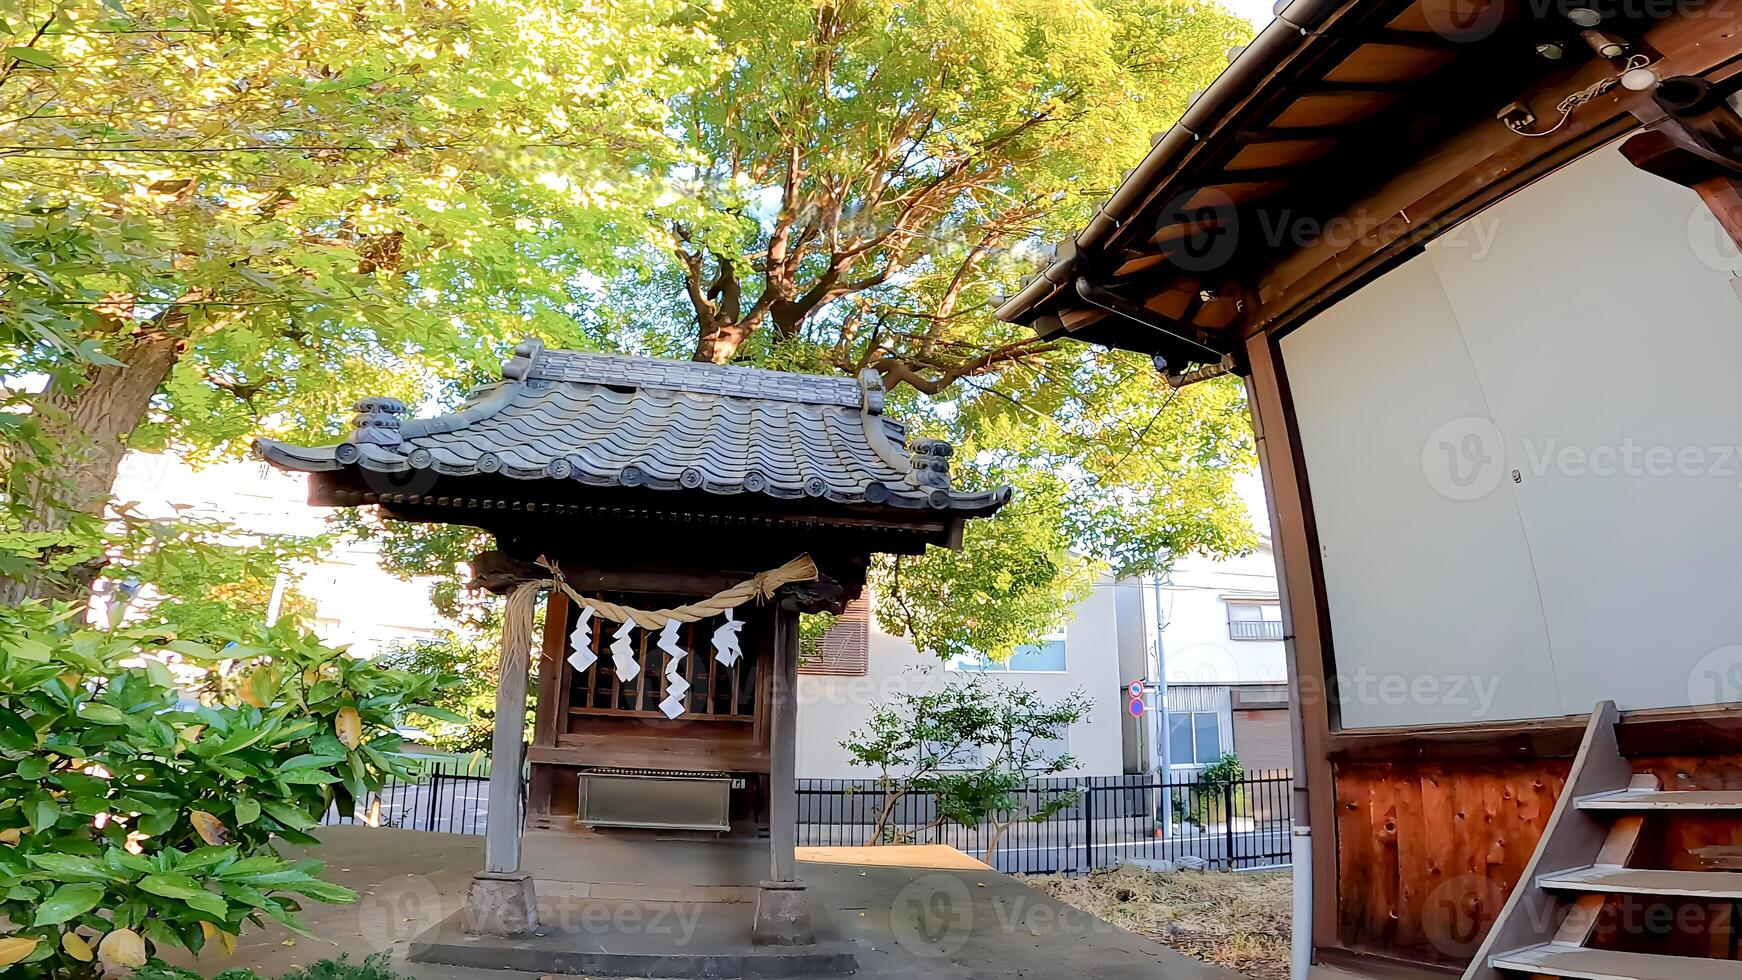 Rokugatsu Hachiman Shrine, a shrine in Rokugatsu, Adachi-ku, Tokyo, Japan. It was built during the 1053-1058 photo